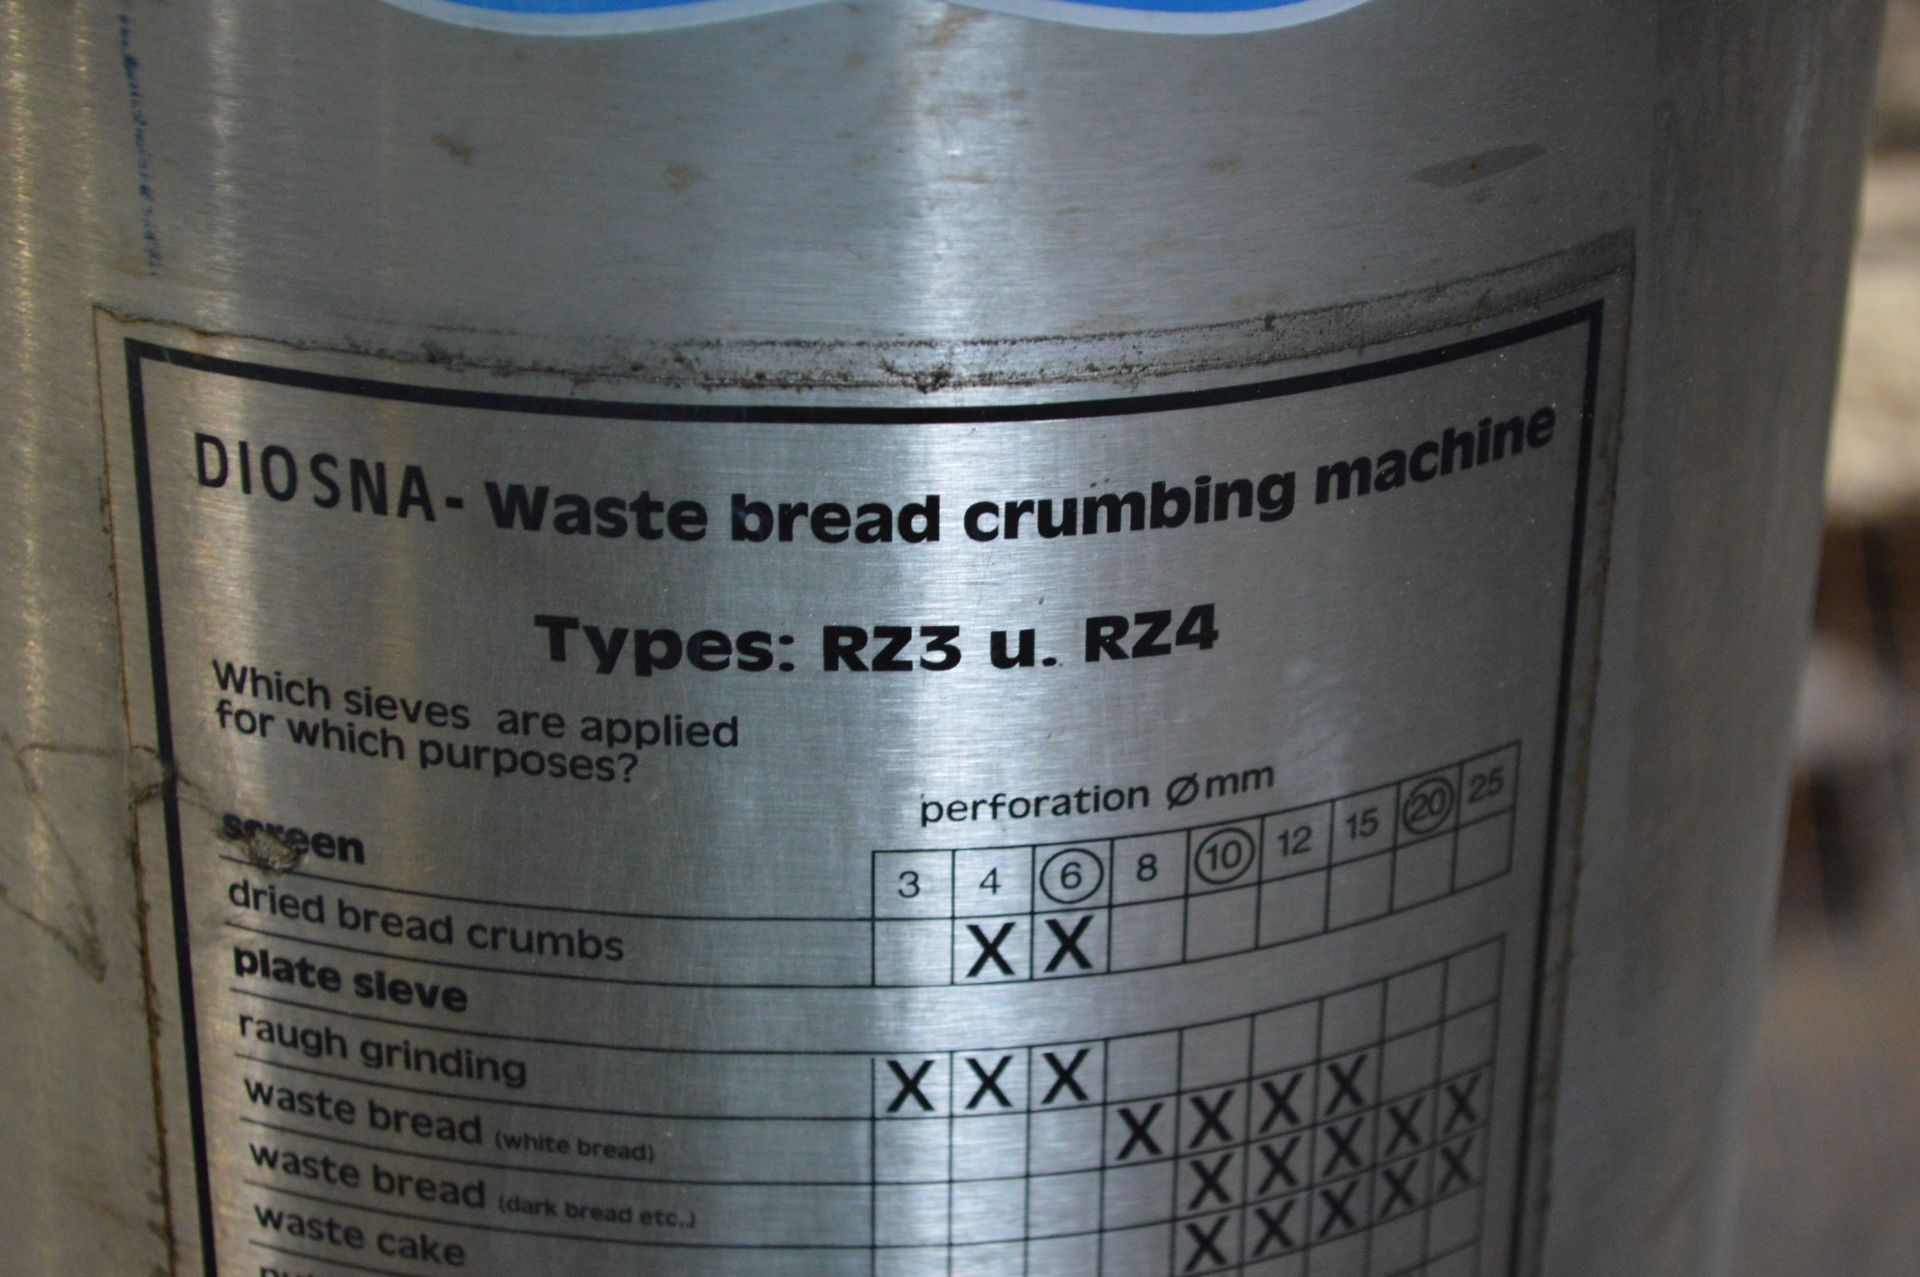 Diosna RZ3 U.RZ4 WASTE BREAD CRUMBING MACHINE, serial no. 104-288 - Image 3 of 4